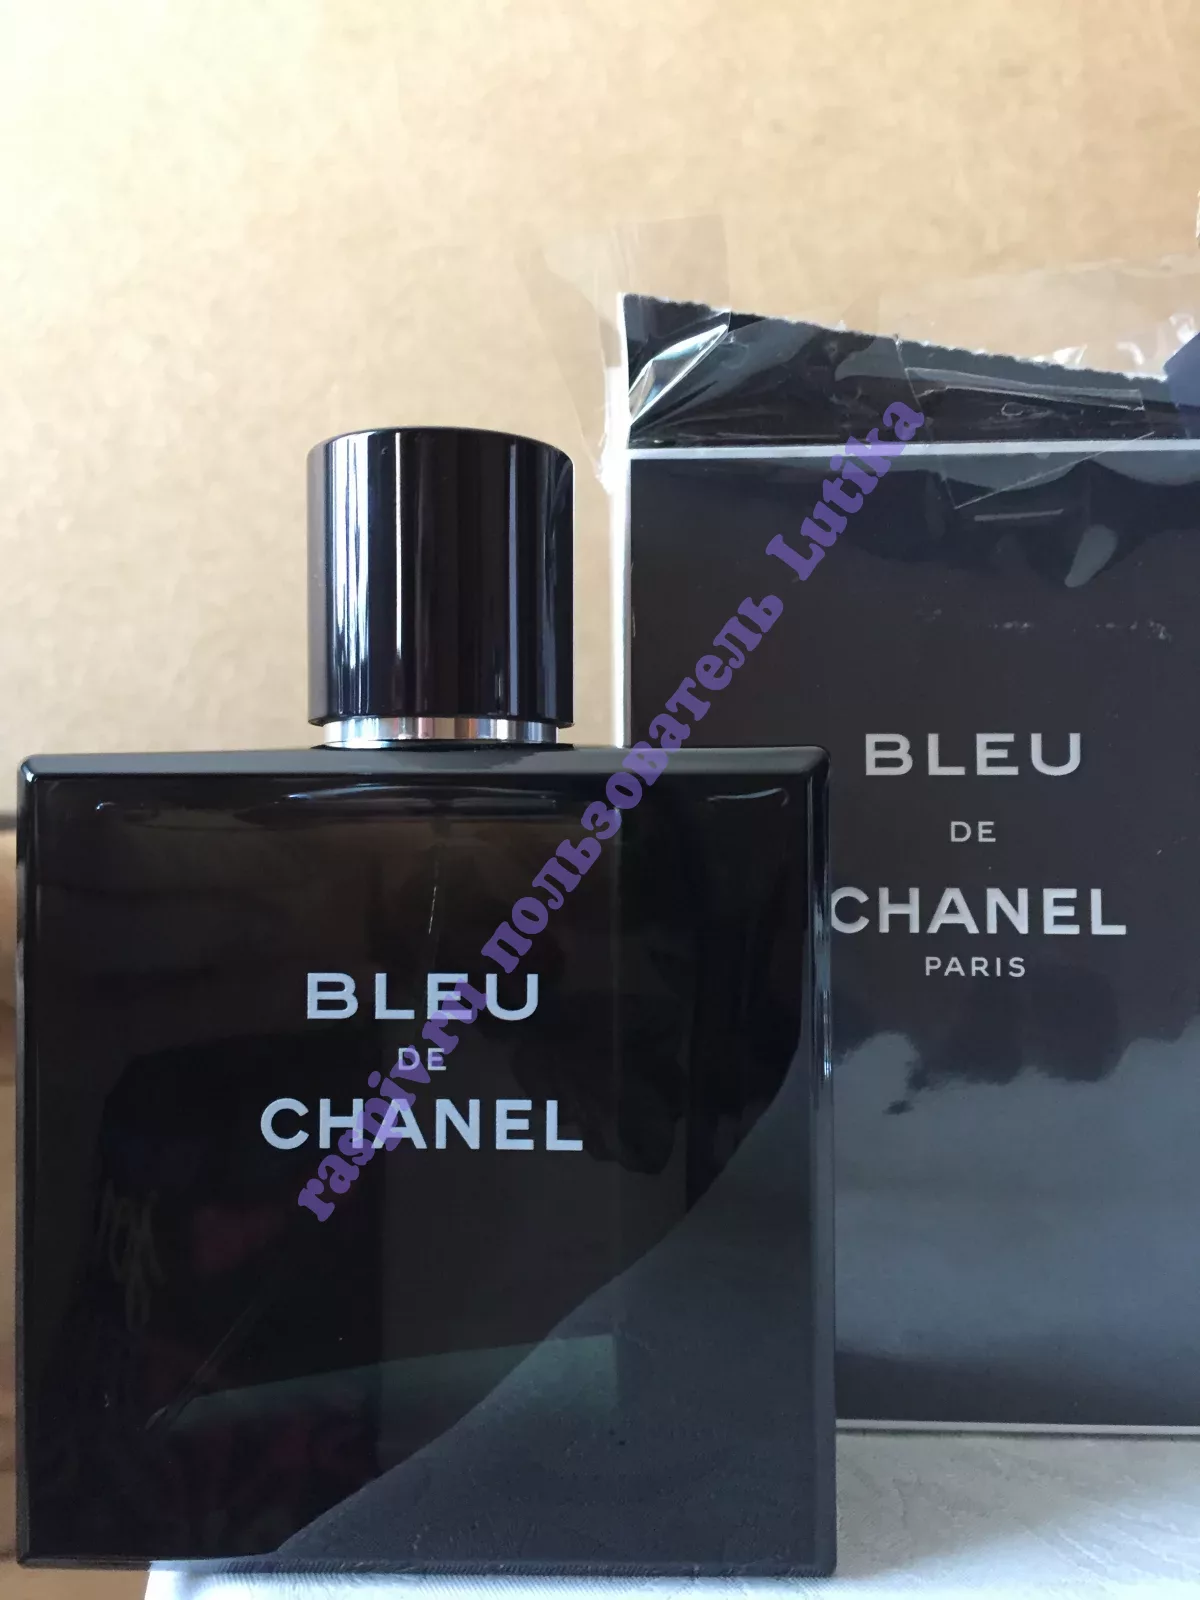 Chanel bleu de Chanel 10 мл. Bleu de Chanel картинка. Bleu de Chanel отзывы. Chanel bleu в руках.